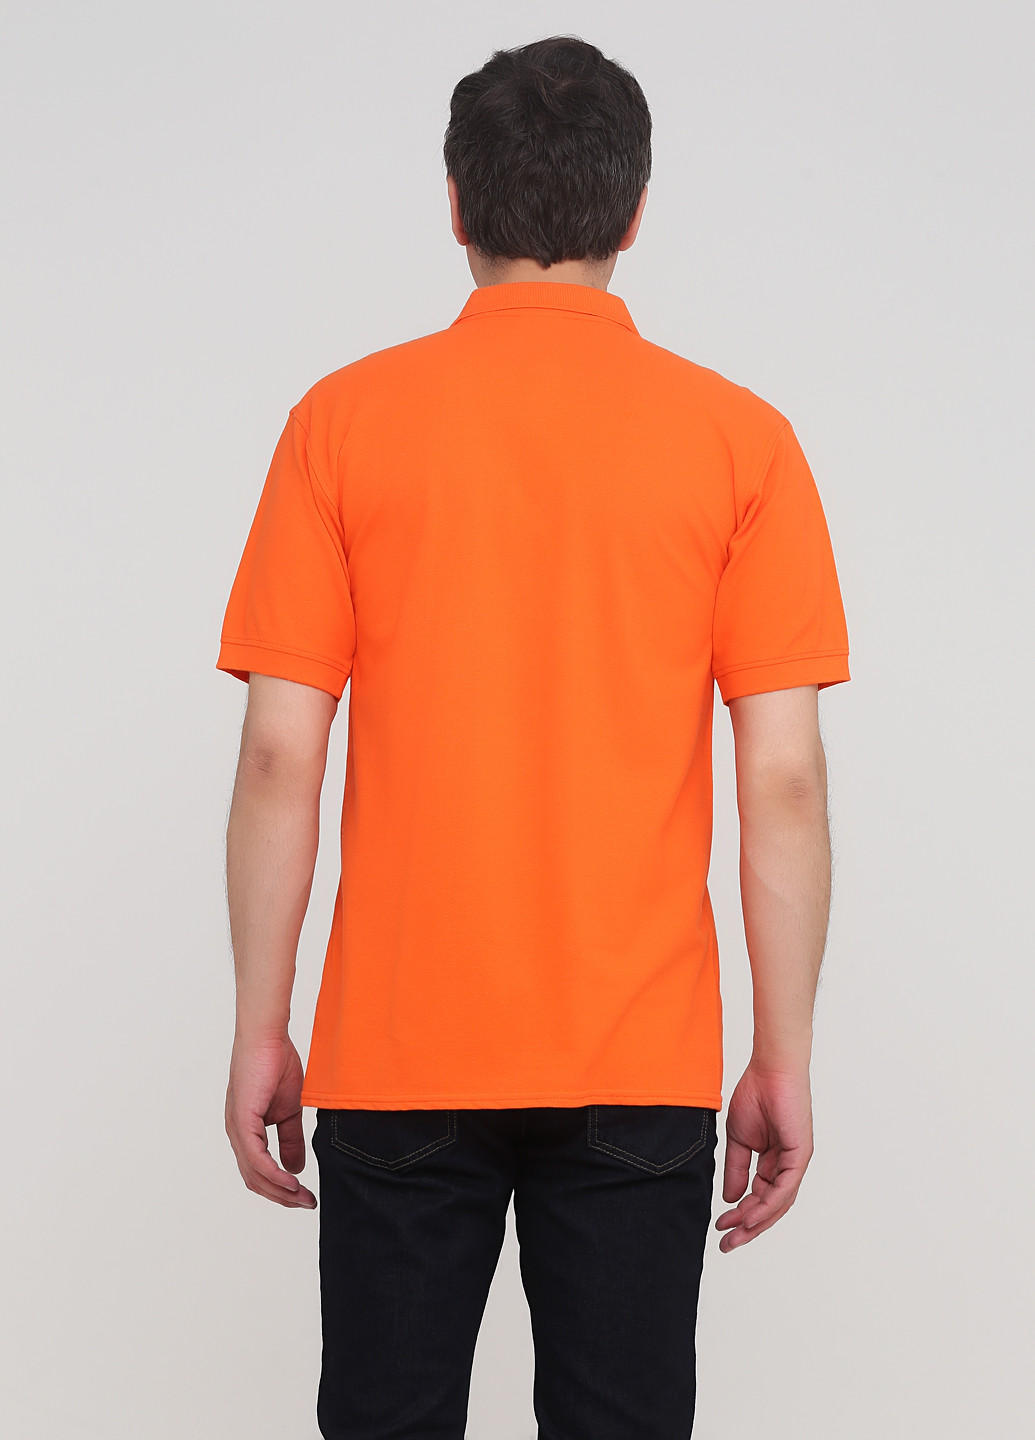 Оранжевая футболка-поло для мужчин Port Company однотонная